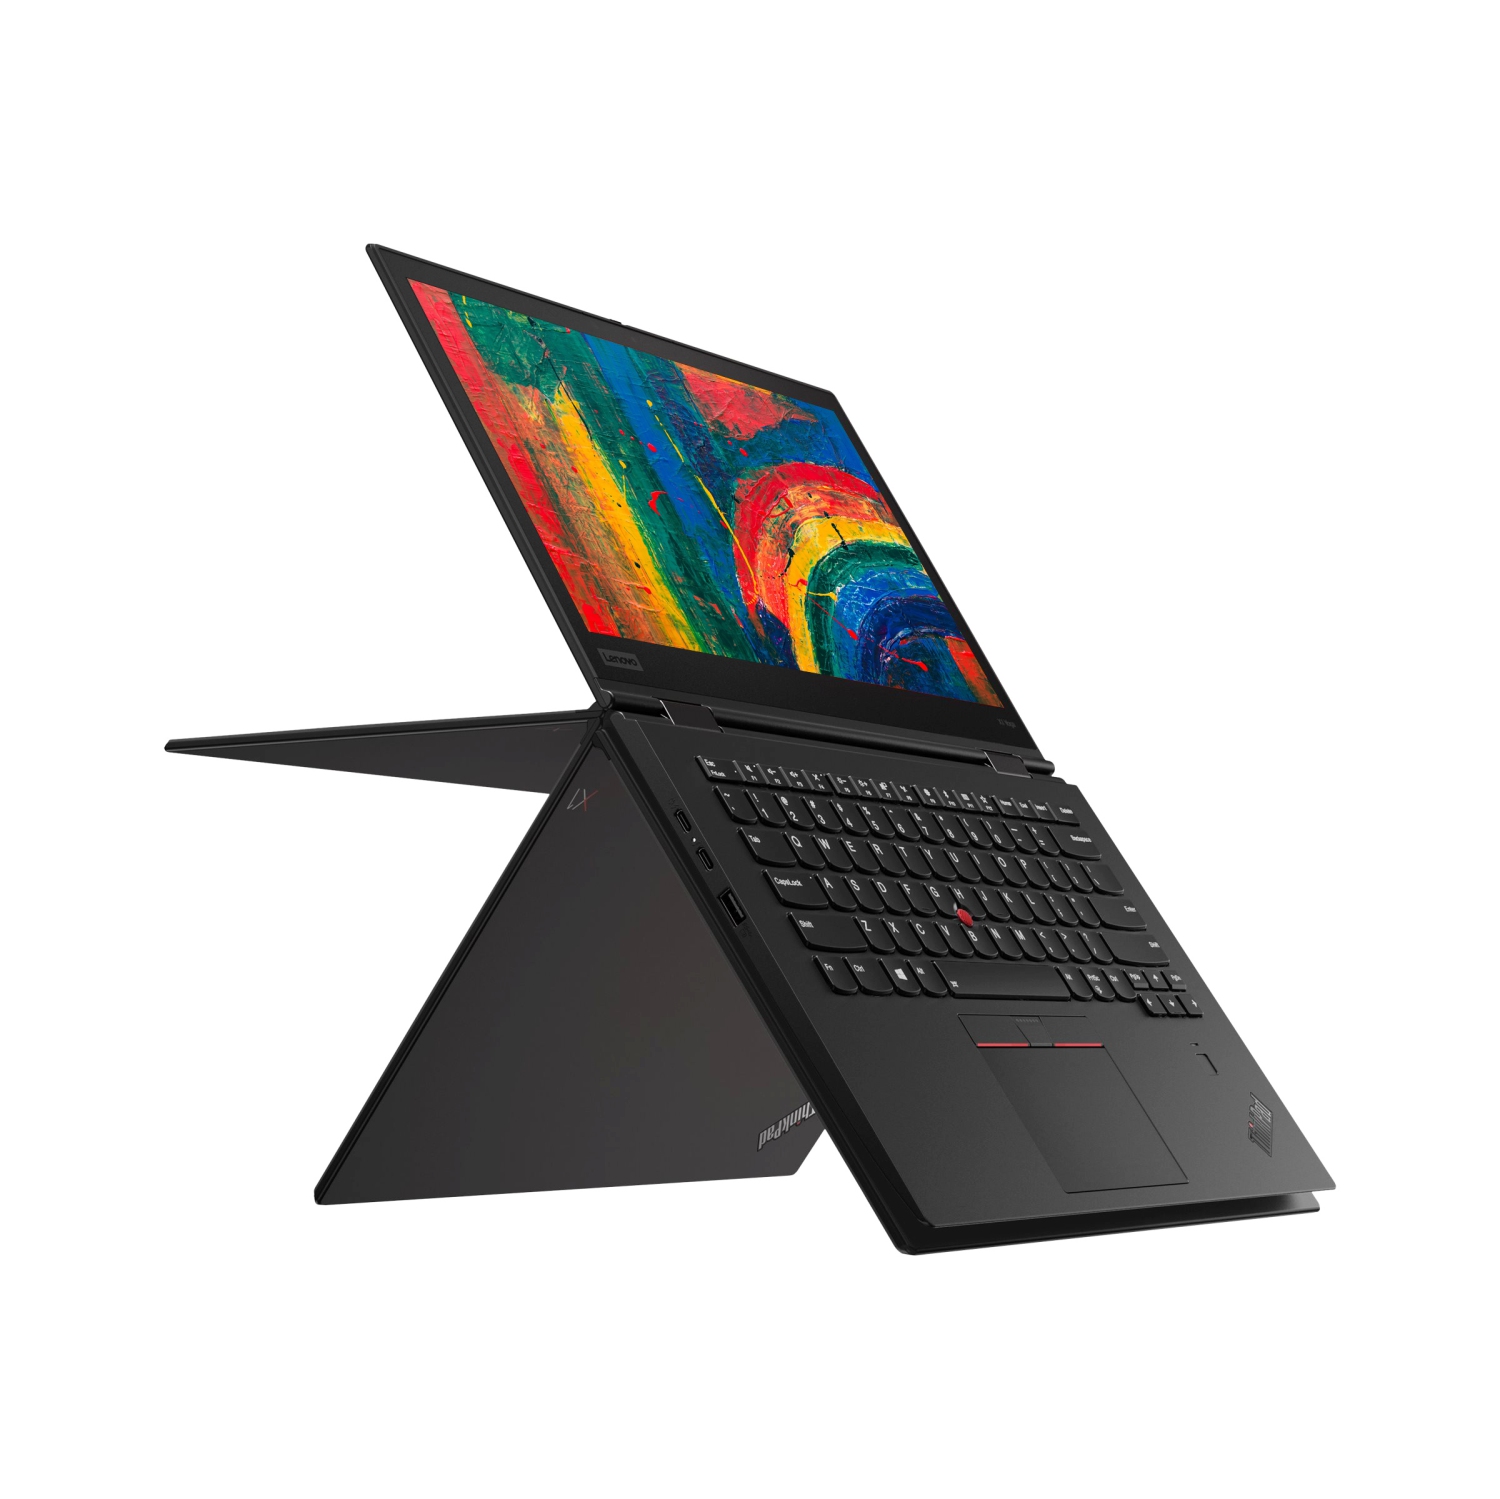 Refurbished (Good) - Lenovo Thinkpad X1 Yoga Gen 3 14" Touchscreen 2-in-1 Business Laptop, Intel Core i5-7300U 2.40GHz, 8GB RAM, 256GB SSD, Windows 10 Pro